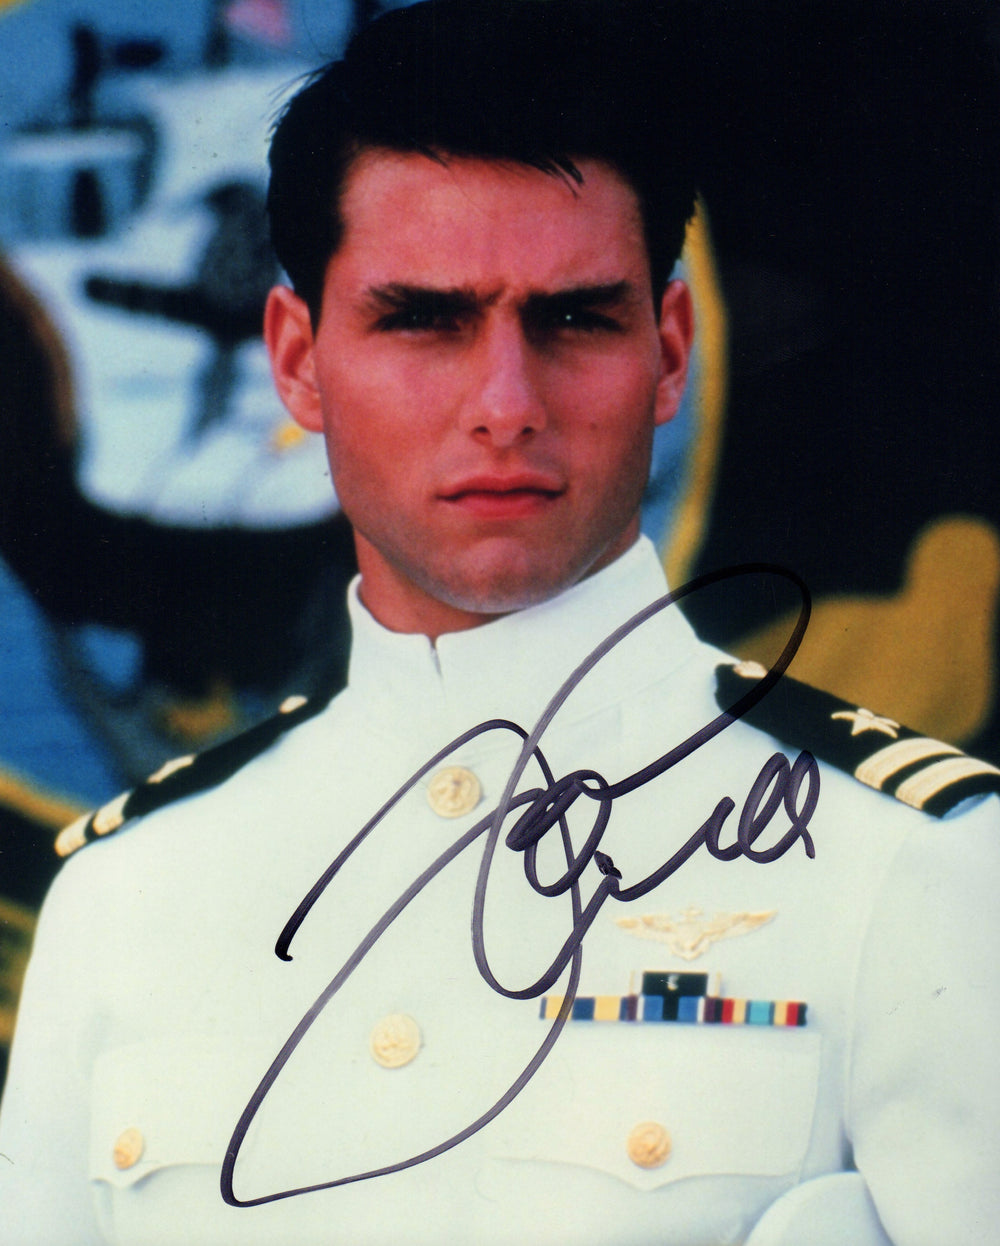 Tom Cruise as Maverick in Top Gun Signed 8x10 Photo